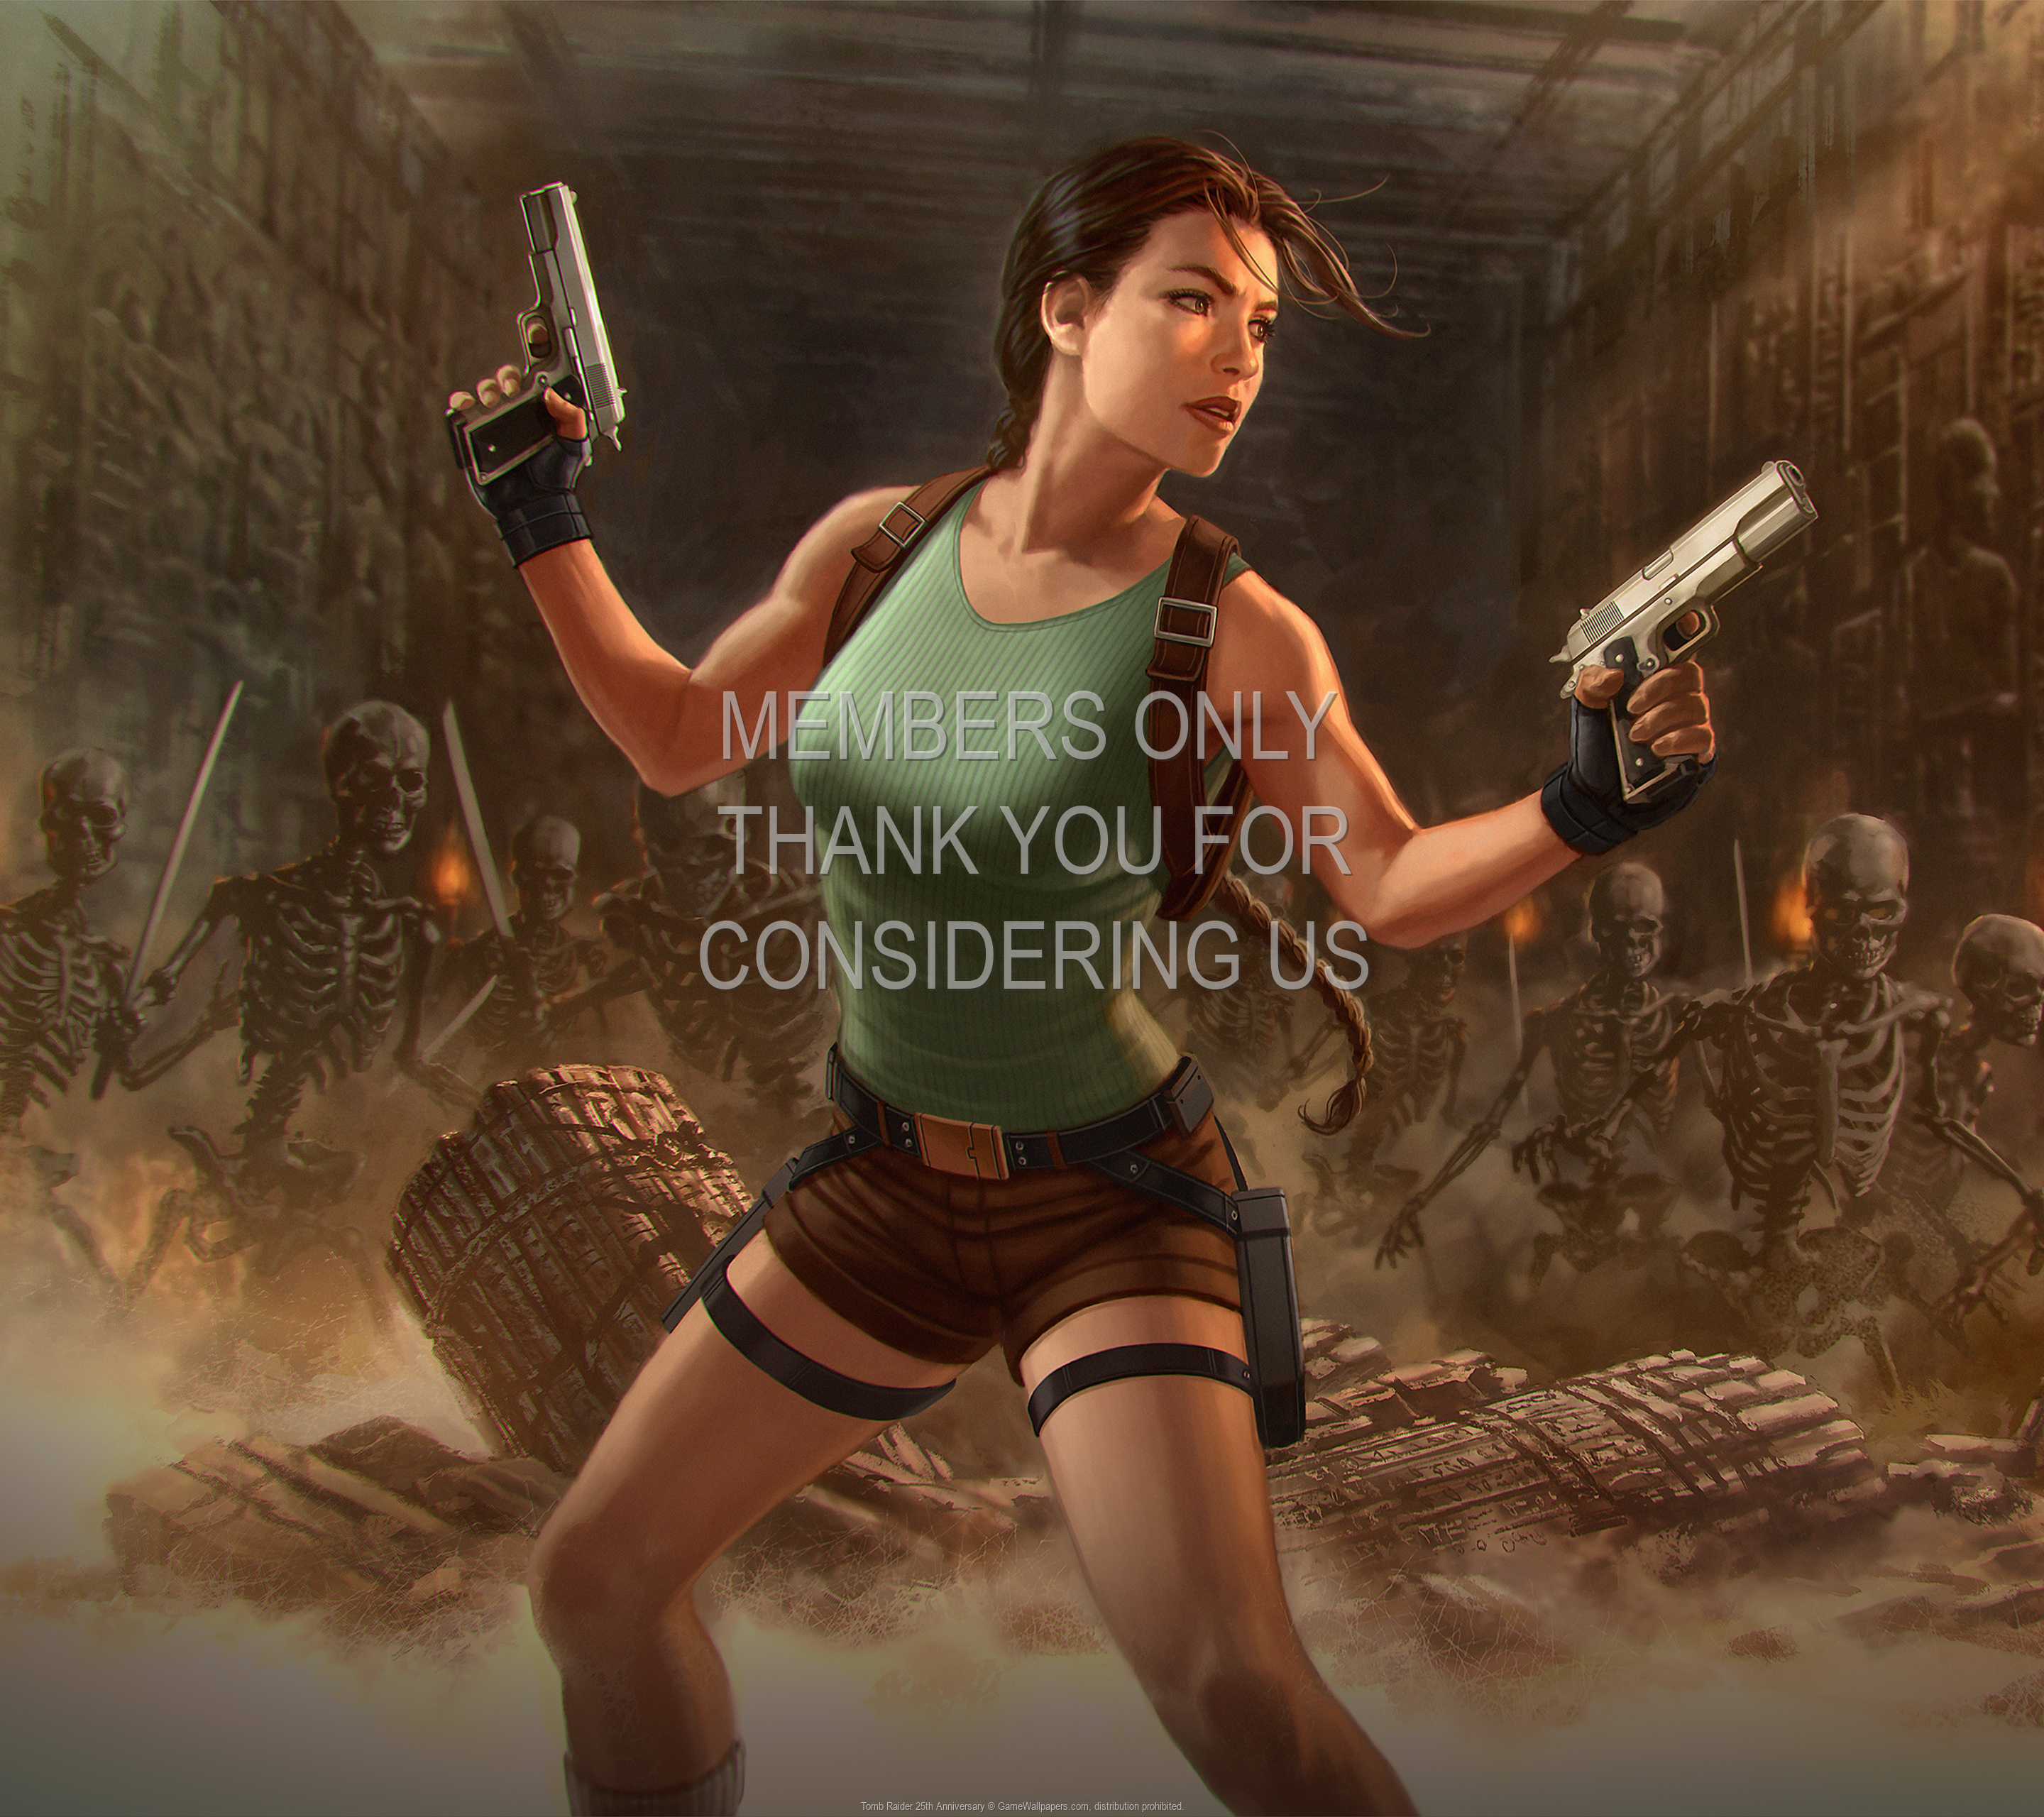 Tomb Raider 25th Anniversary 1440p Horizontal Mobile wallpaper or background 02